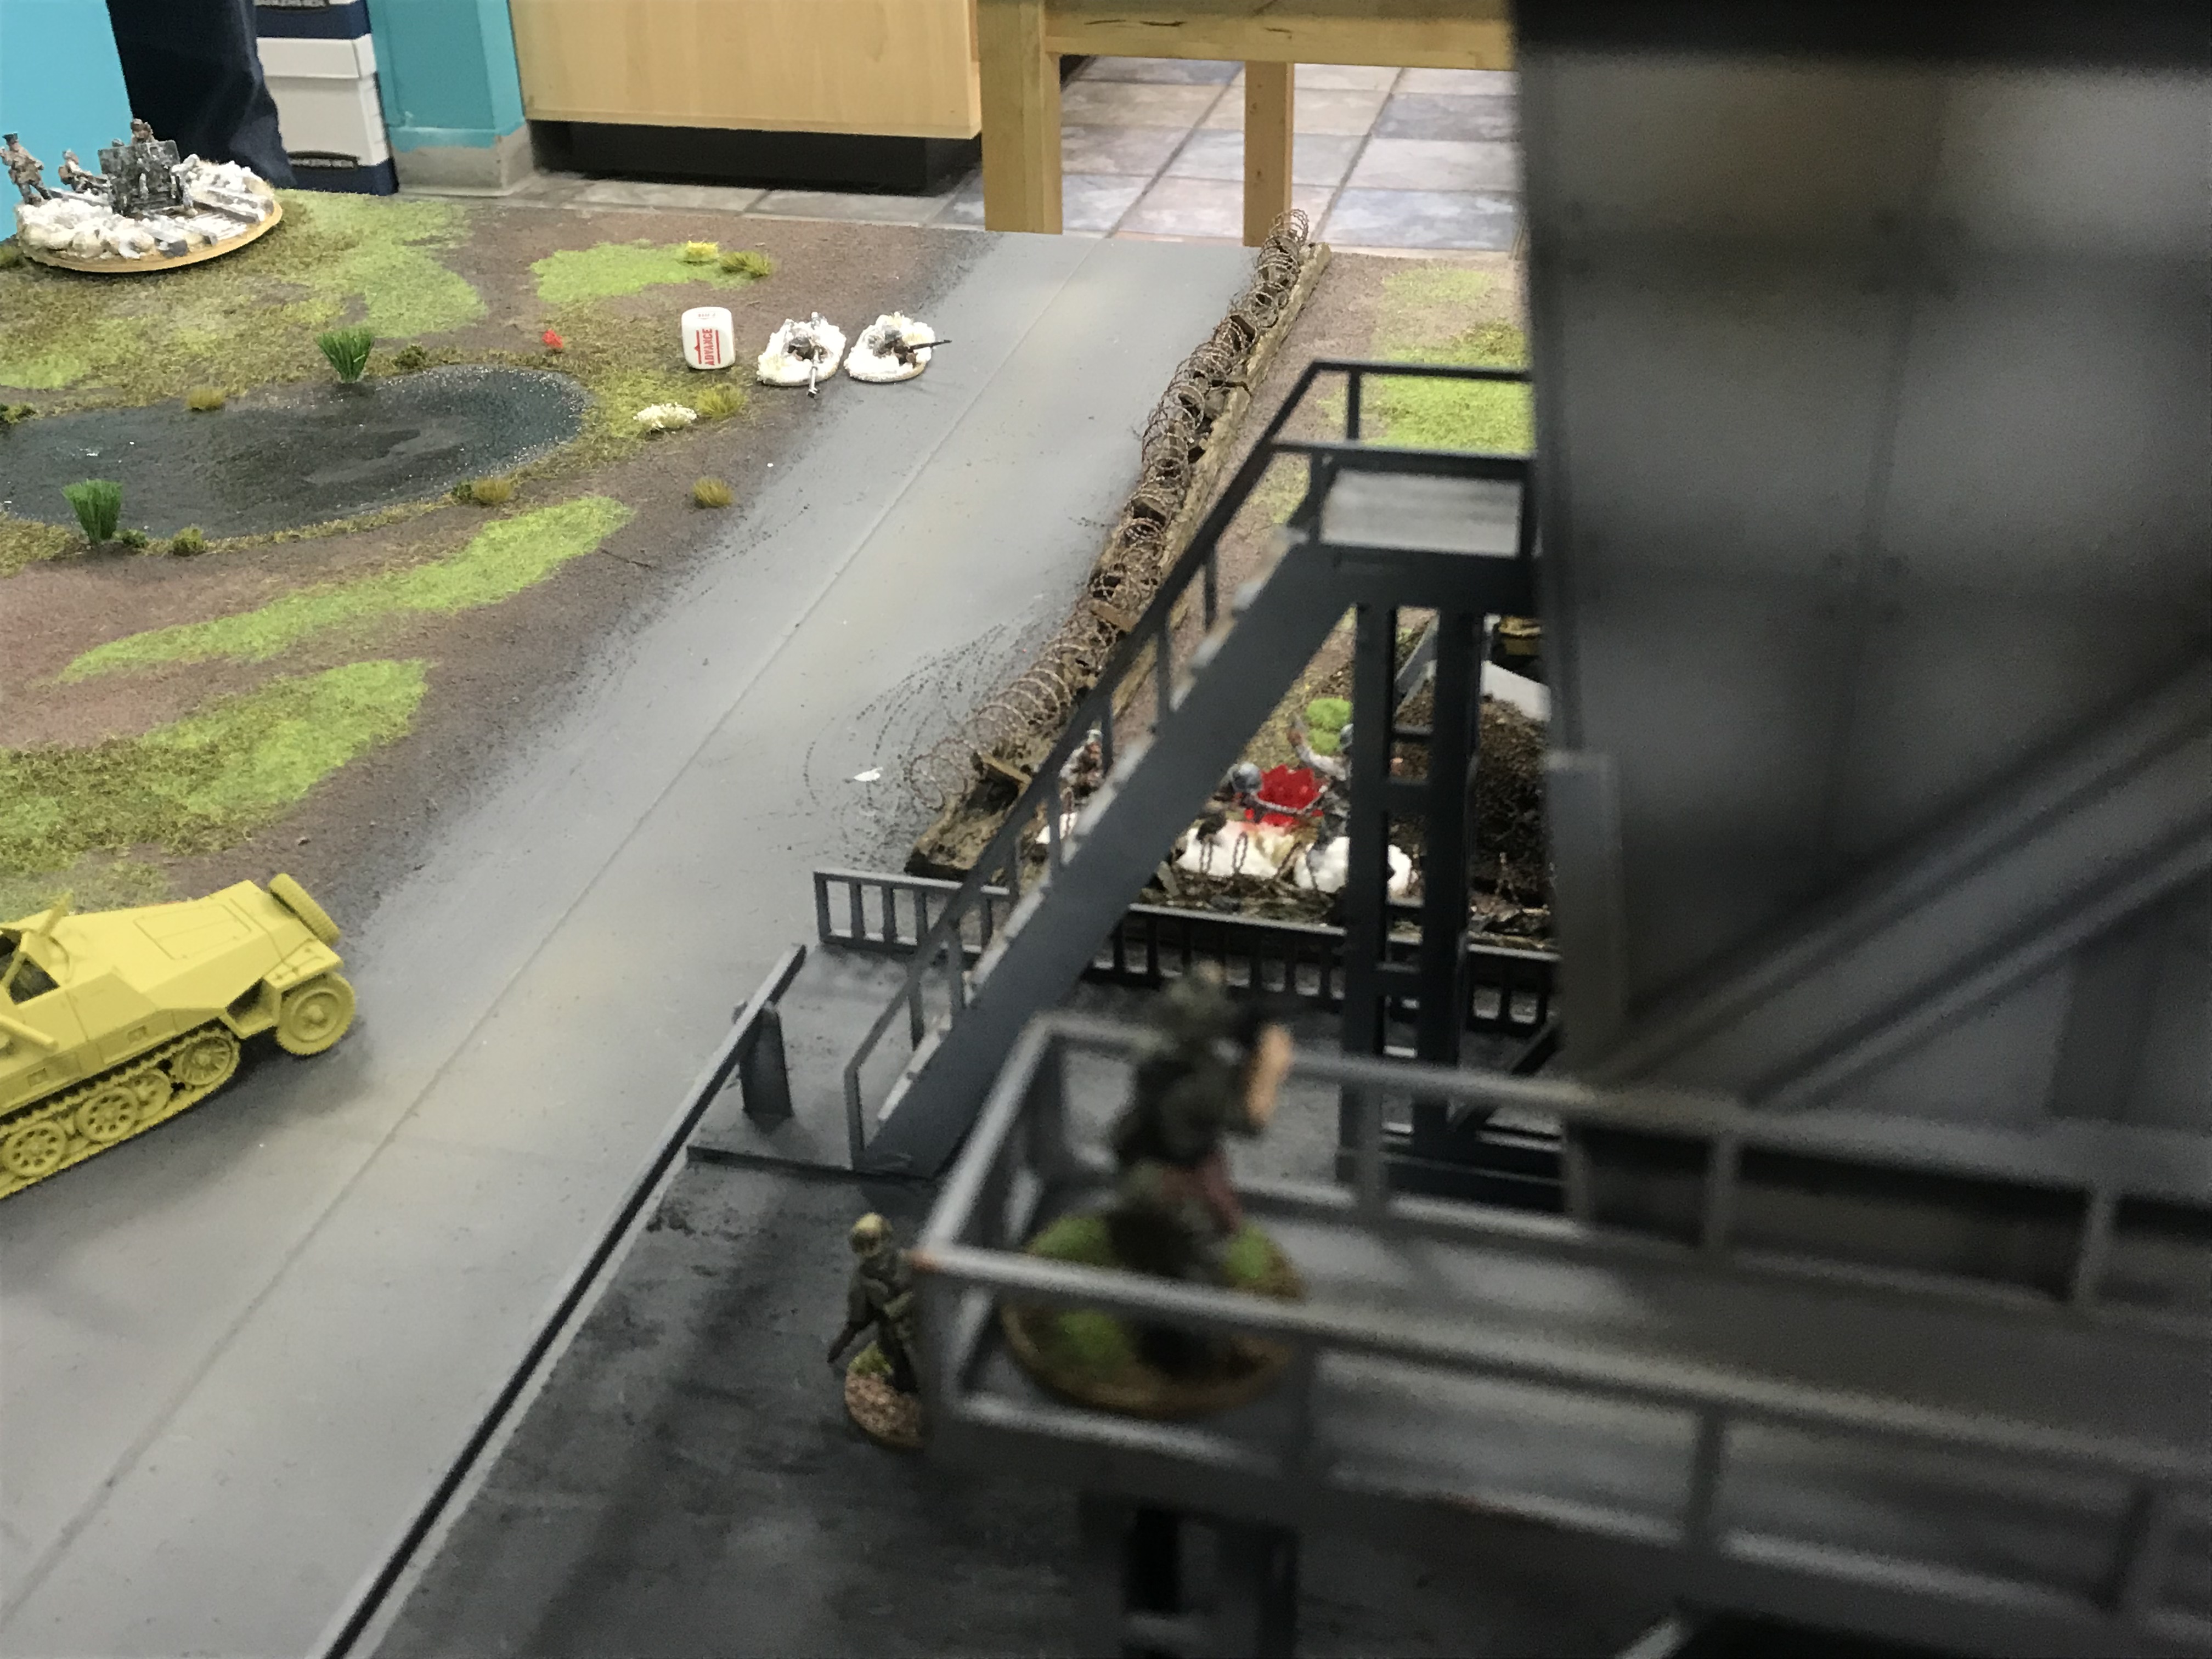 Russianwonderland versus Heer Defenders in a fierce infantry engagement